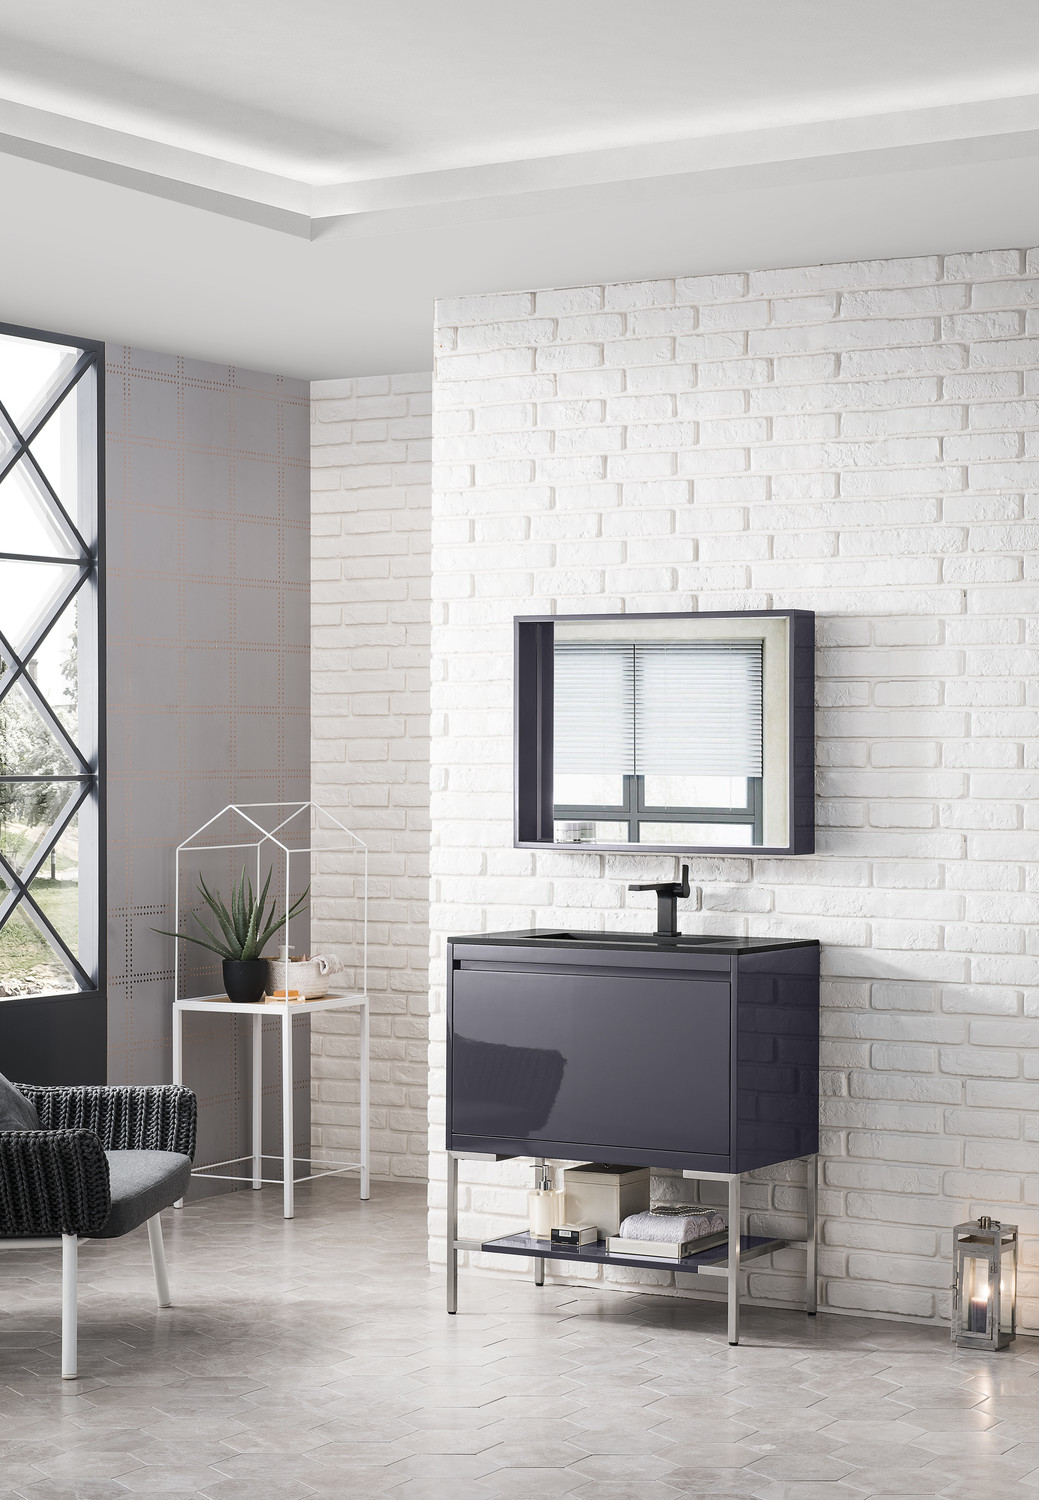 beige bathroom cabinets James Martin Vanity Modern Gray Glossy Transitional